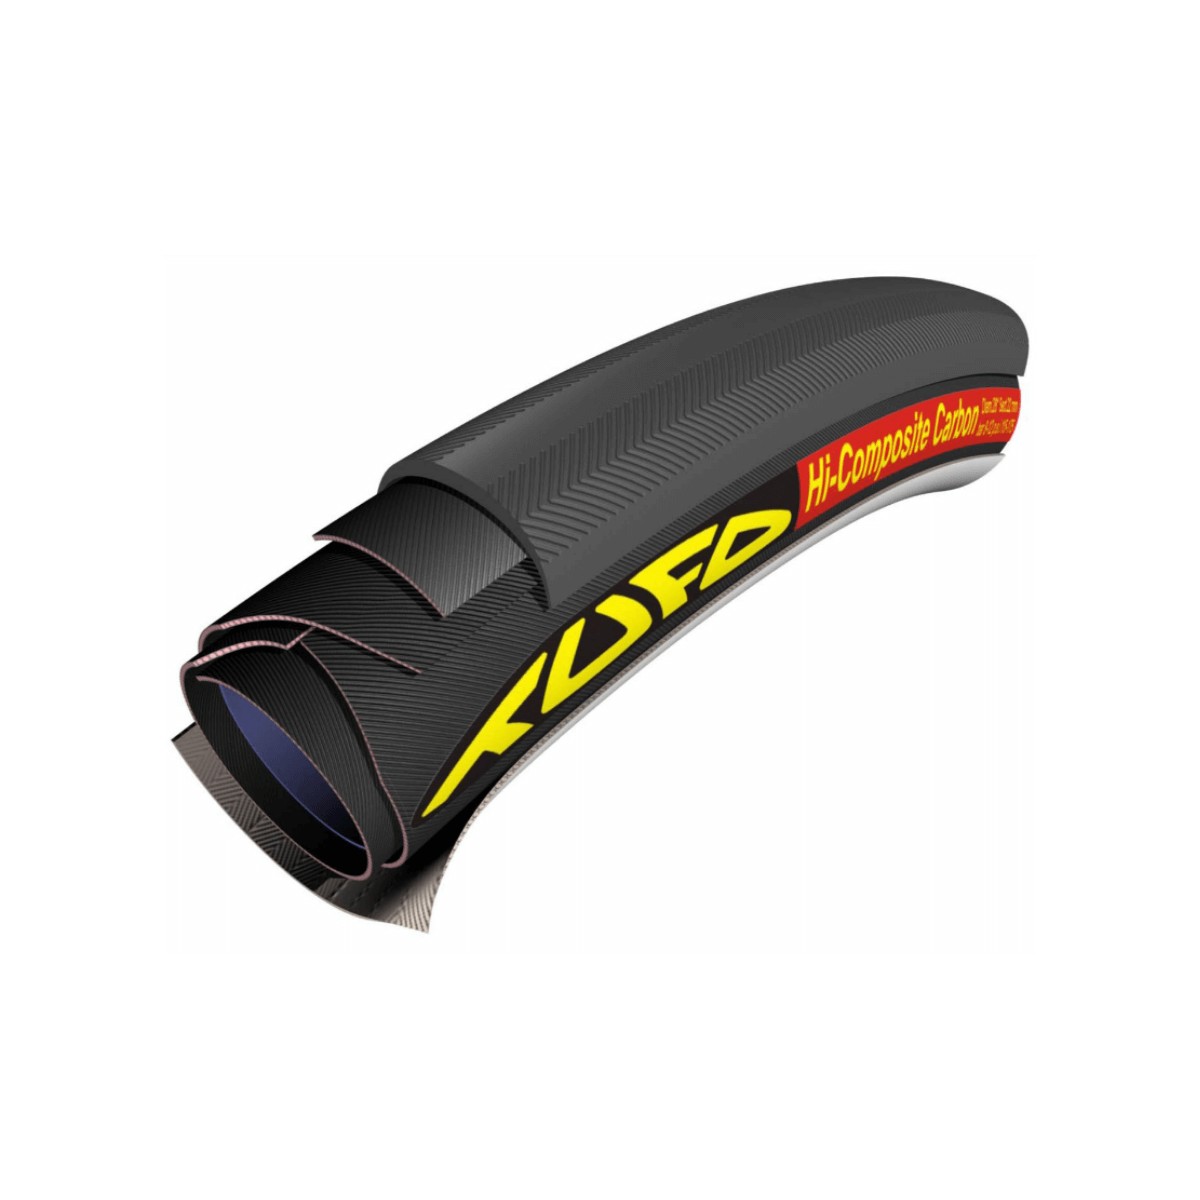 Tufo Carbon Tubular Tire - Hi Composite 700 x 23-25-28, Colour Black, Type mm Black 28 x 23mm